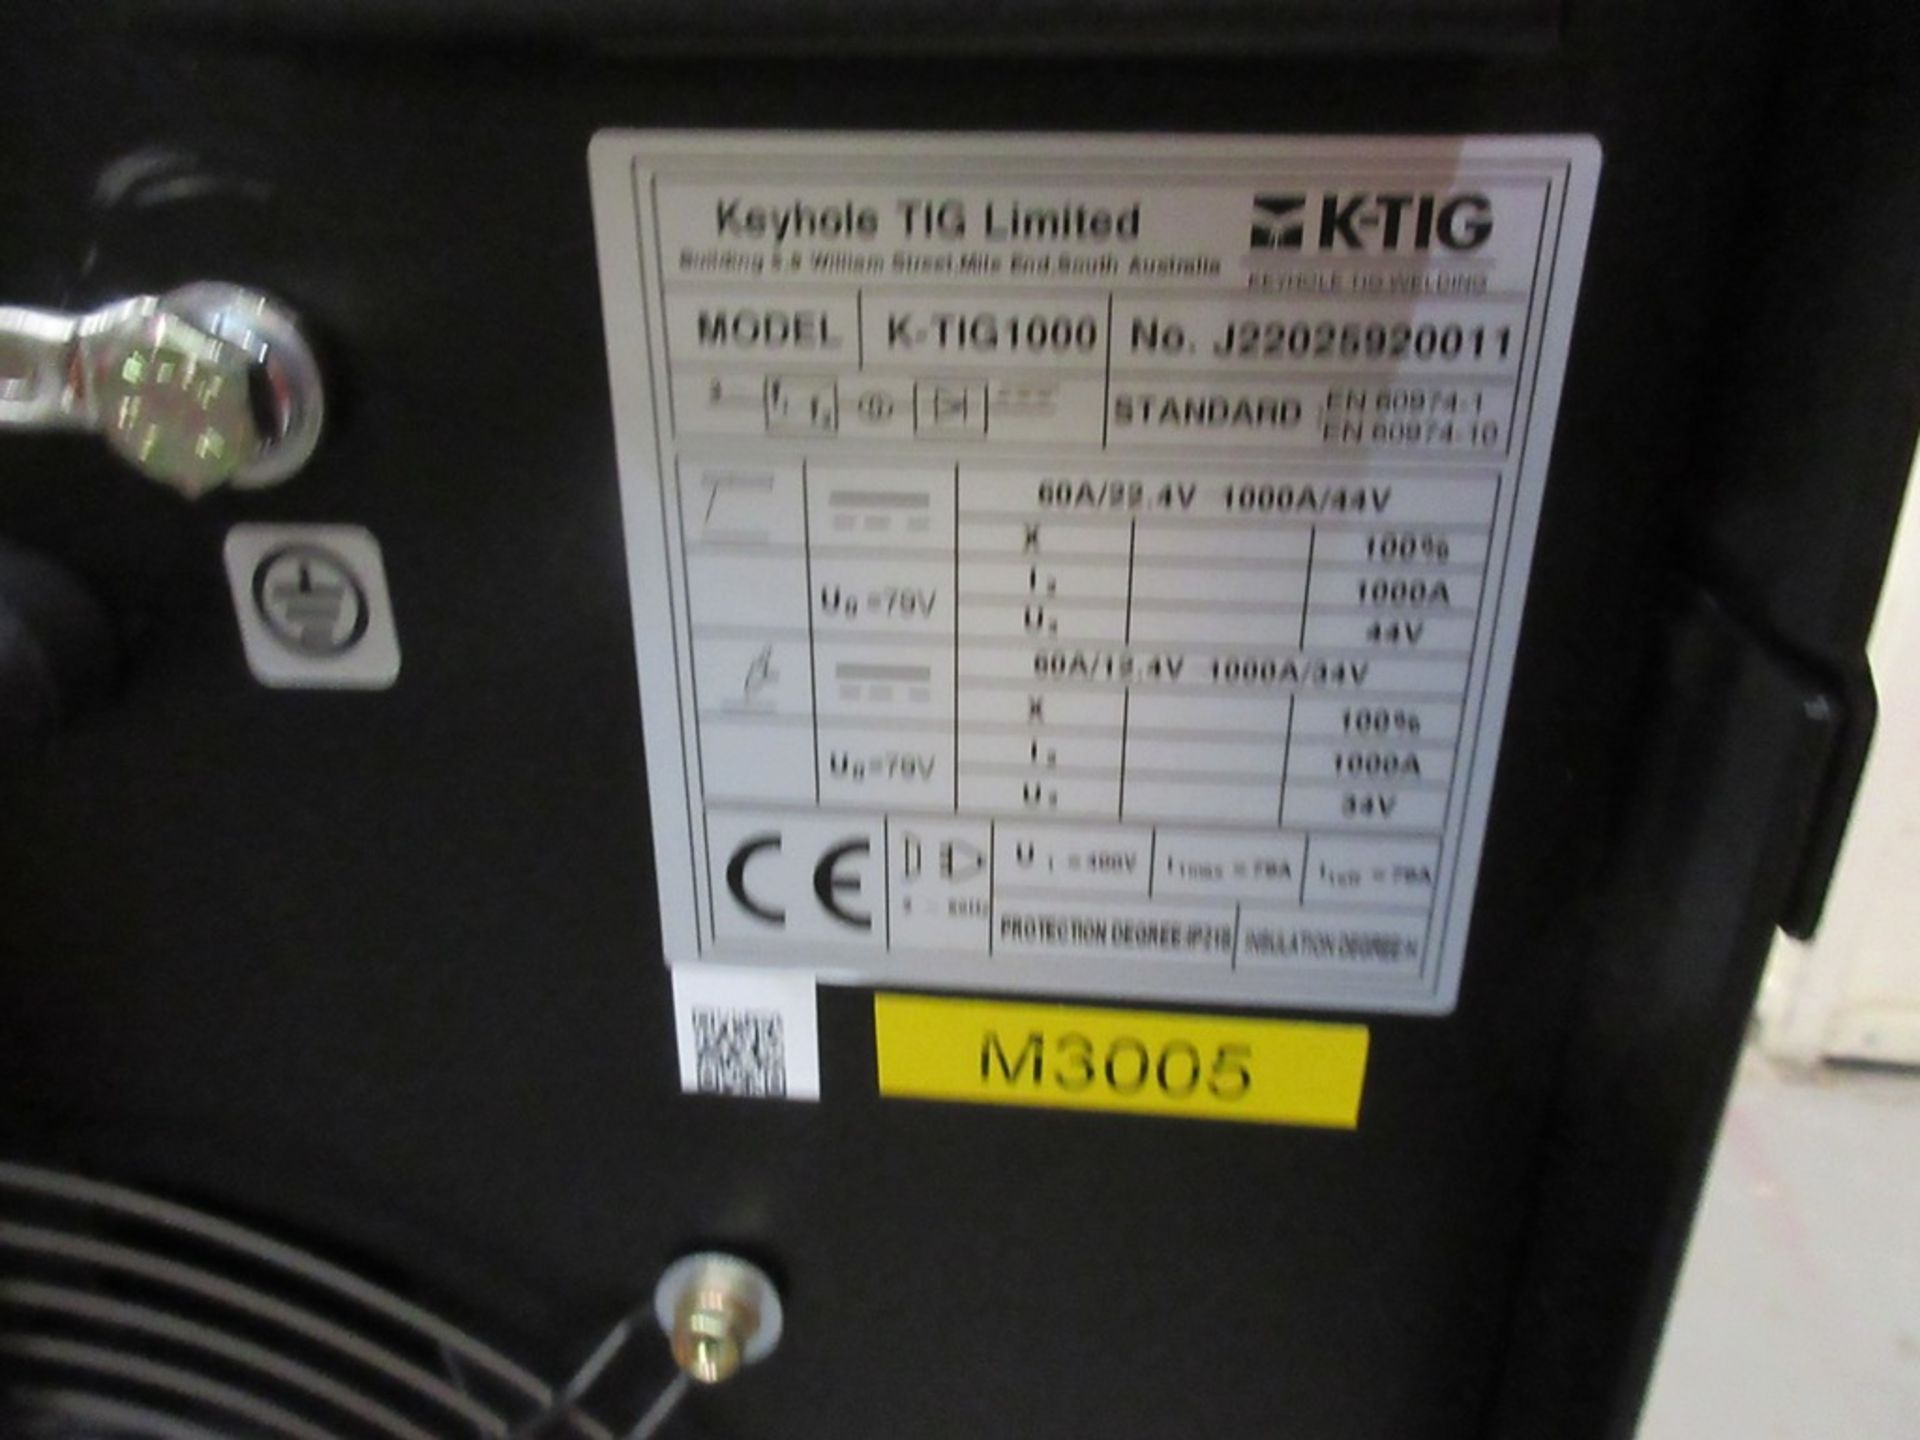 K-Tig Key hole tig welding system to include: - K-Tig 100 digital inverter SMAW-Tig arc welding - Image 3 of 12